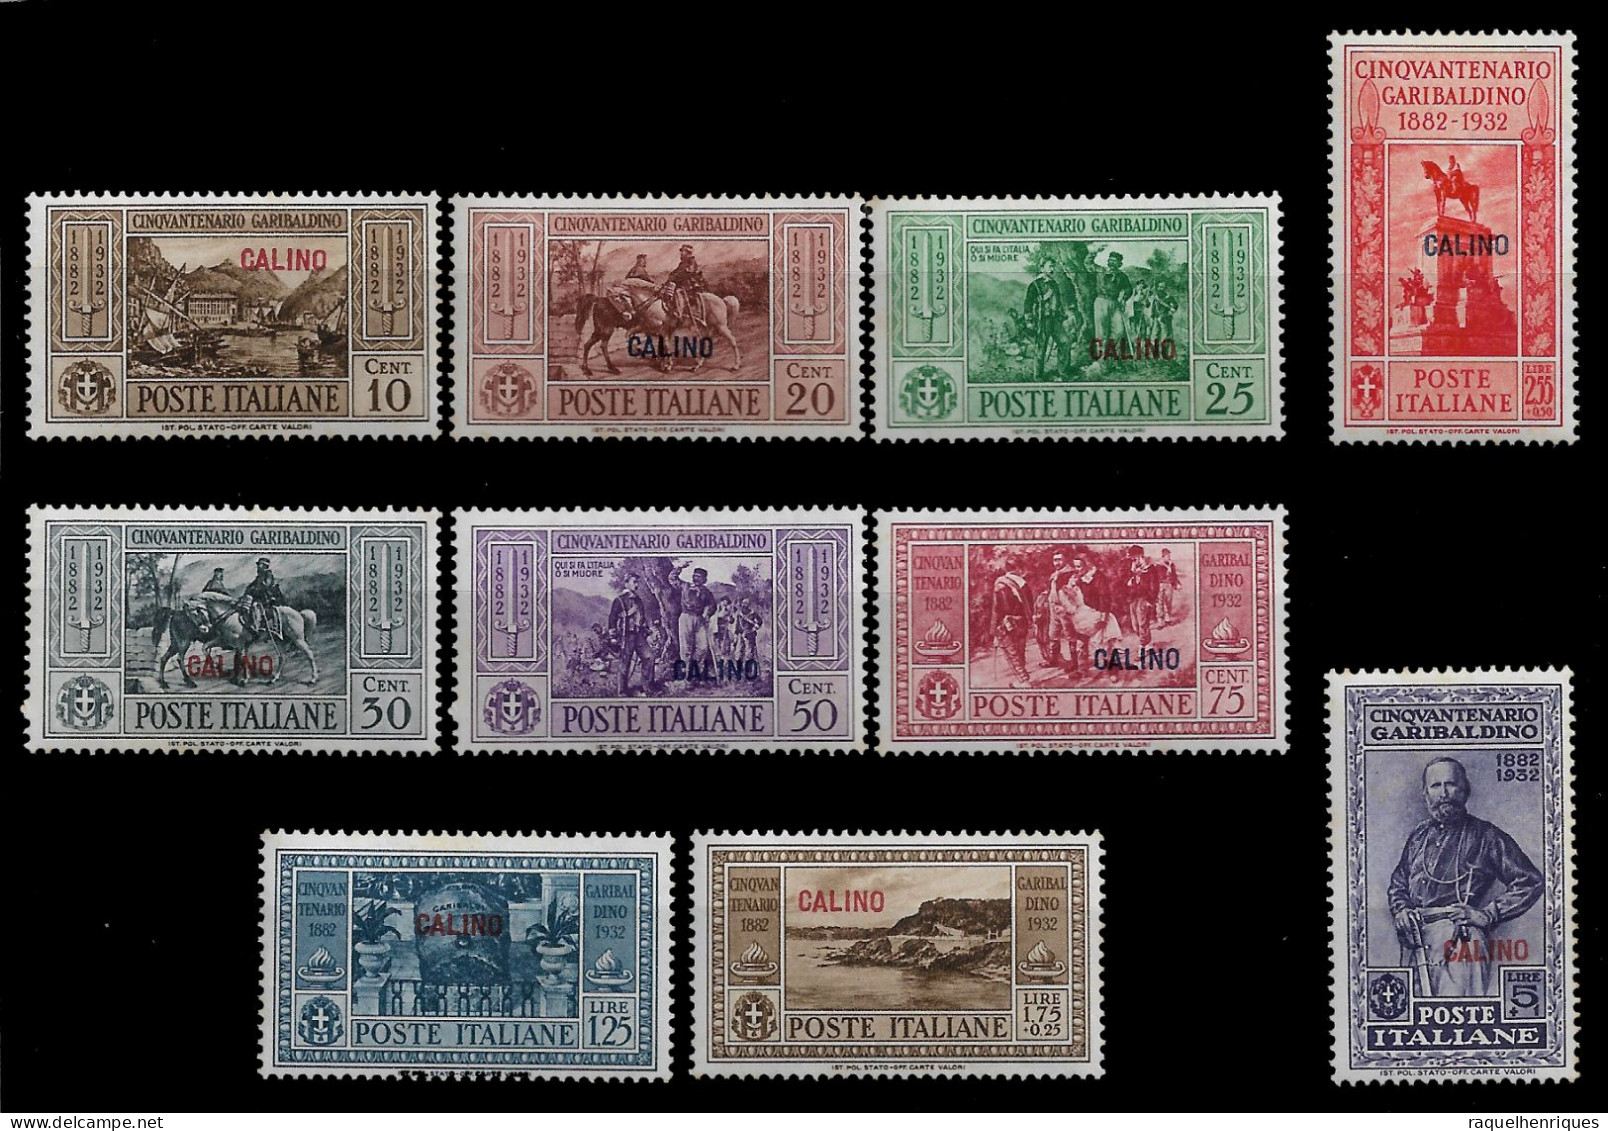 Postage Stamps Of Italian Colonies - CALINO 1932 Giuseppe Garibaldi SET MNH (BA5#402) - Ägäis (Calino)